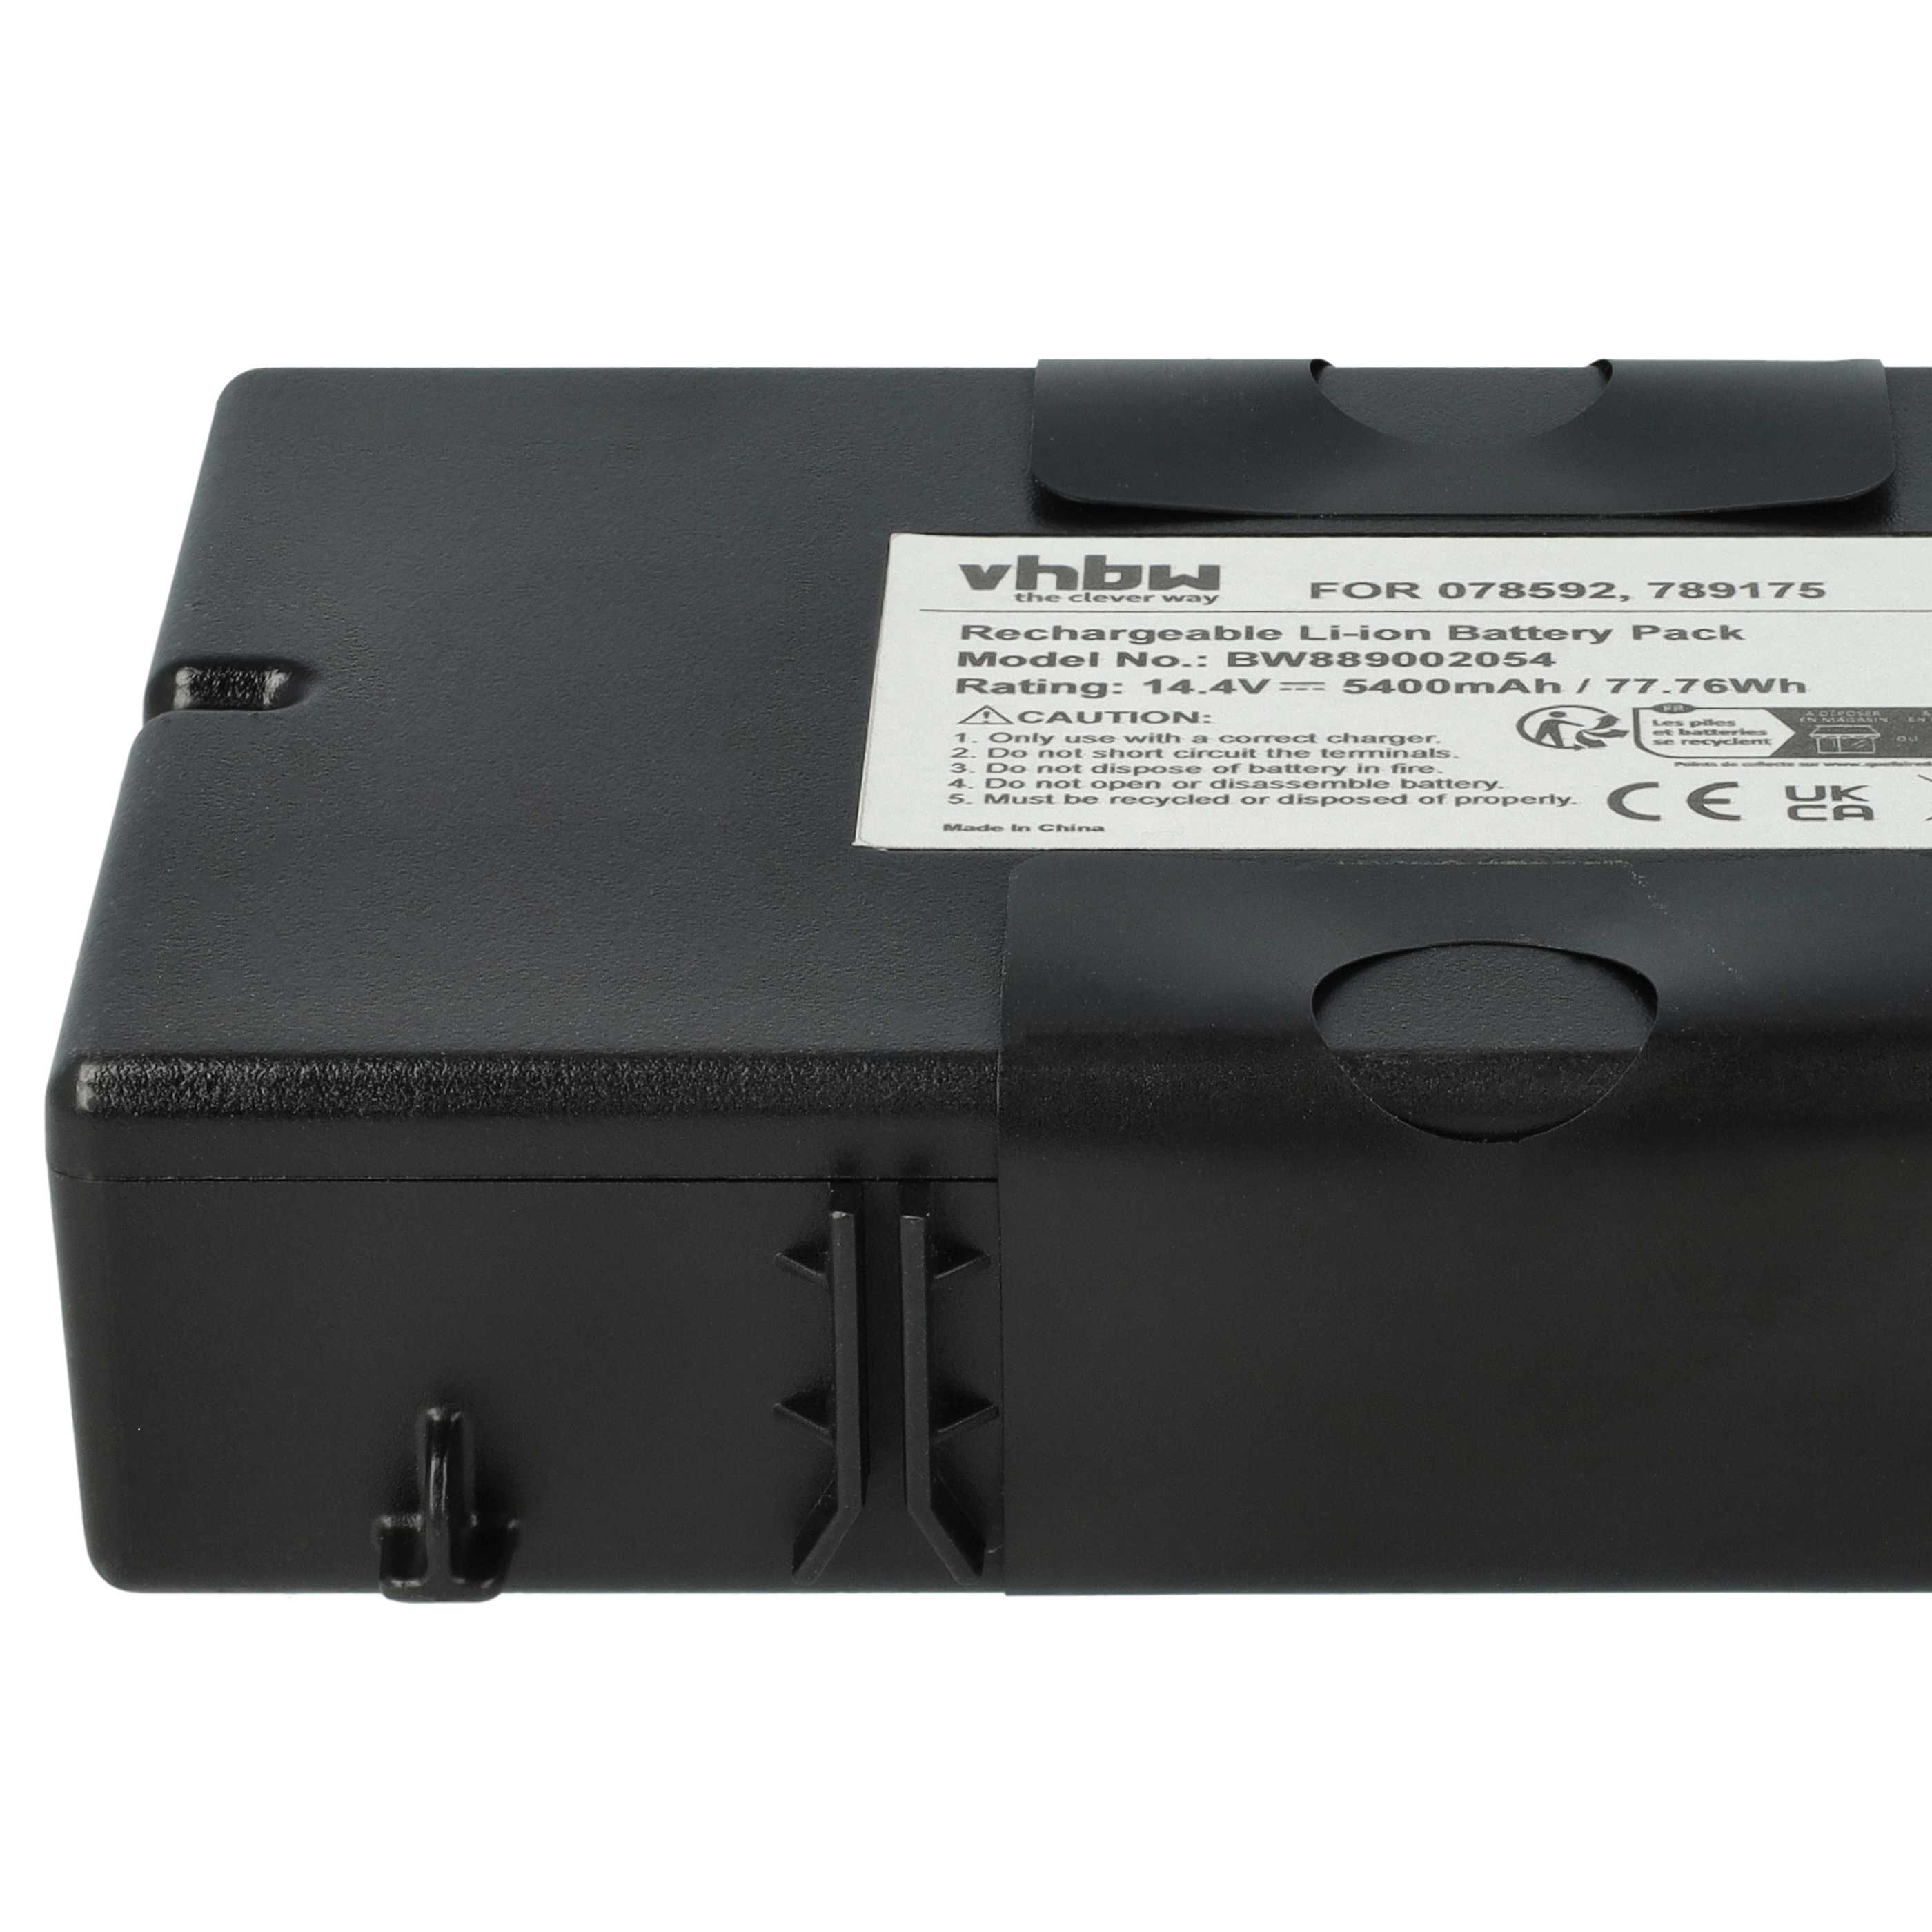 Batería reemplaza Bose 789175, 7891750010, 078592 para altavoces Bose - 5400 mAh 14,4 V Li-Ion